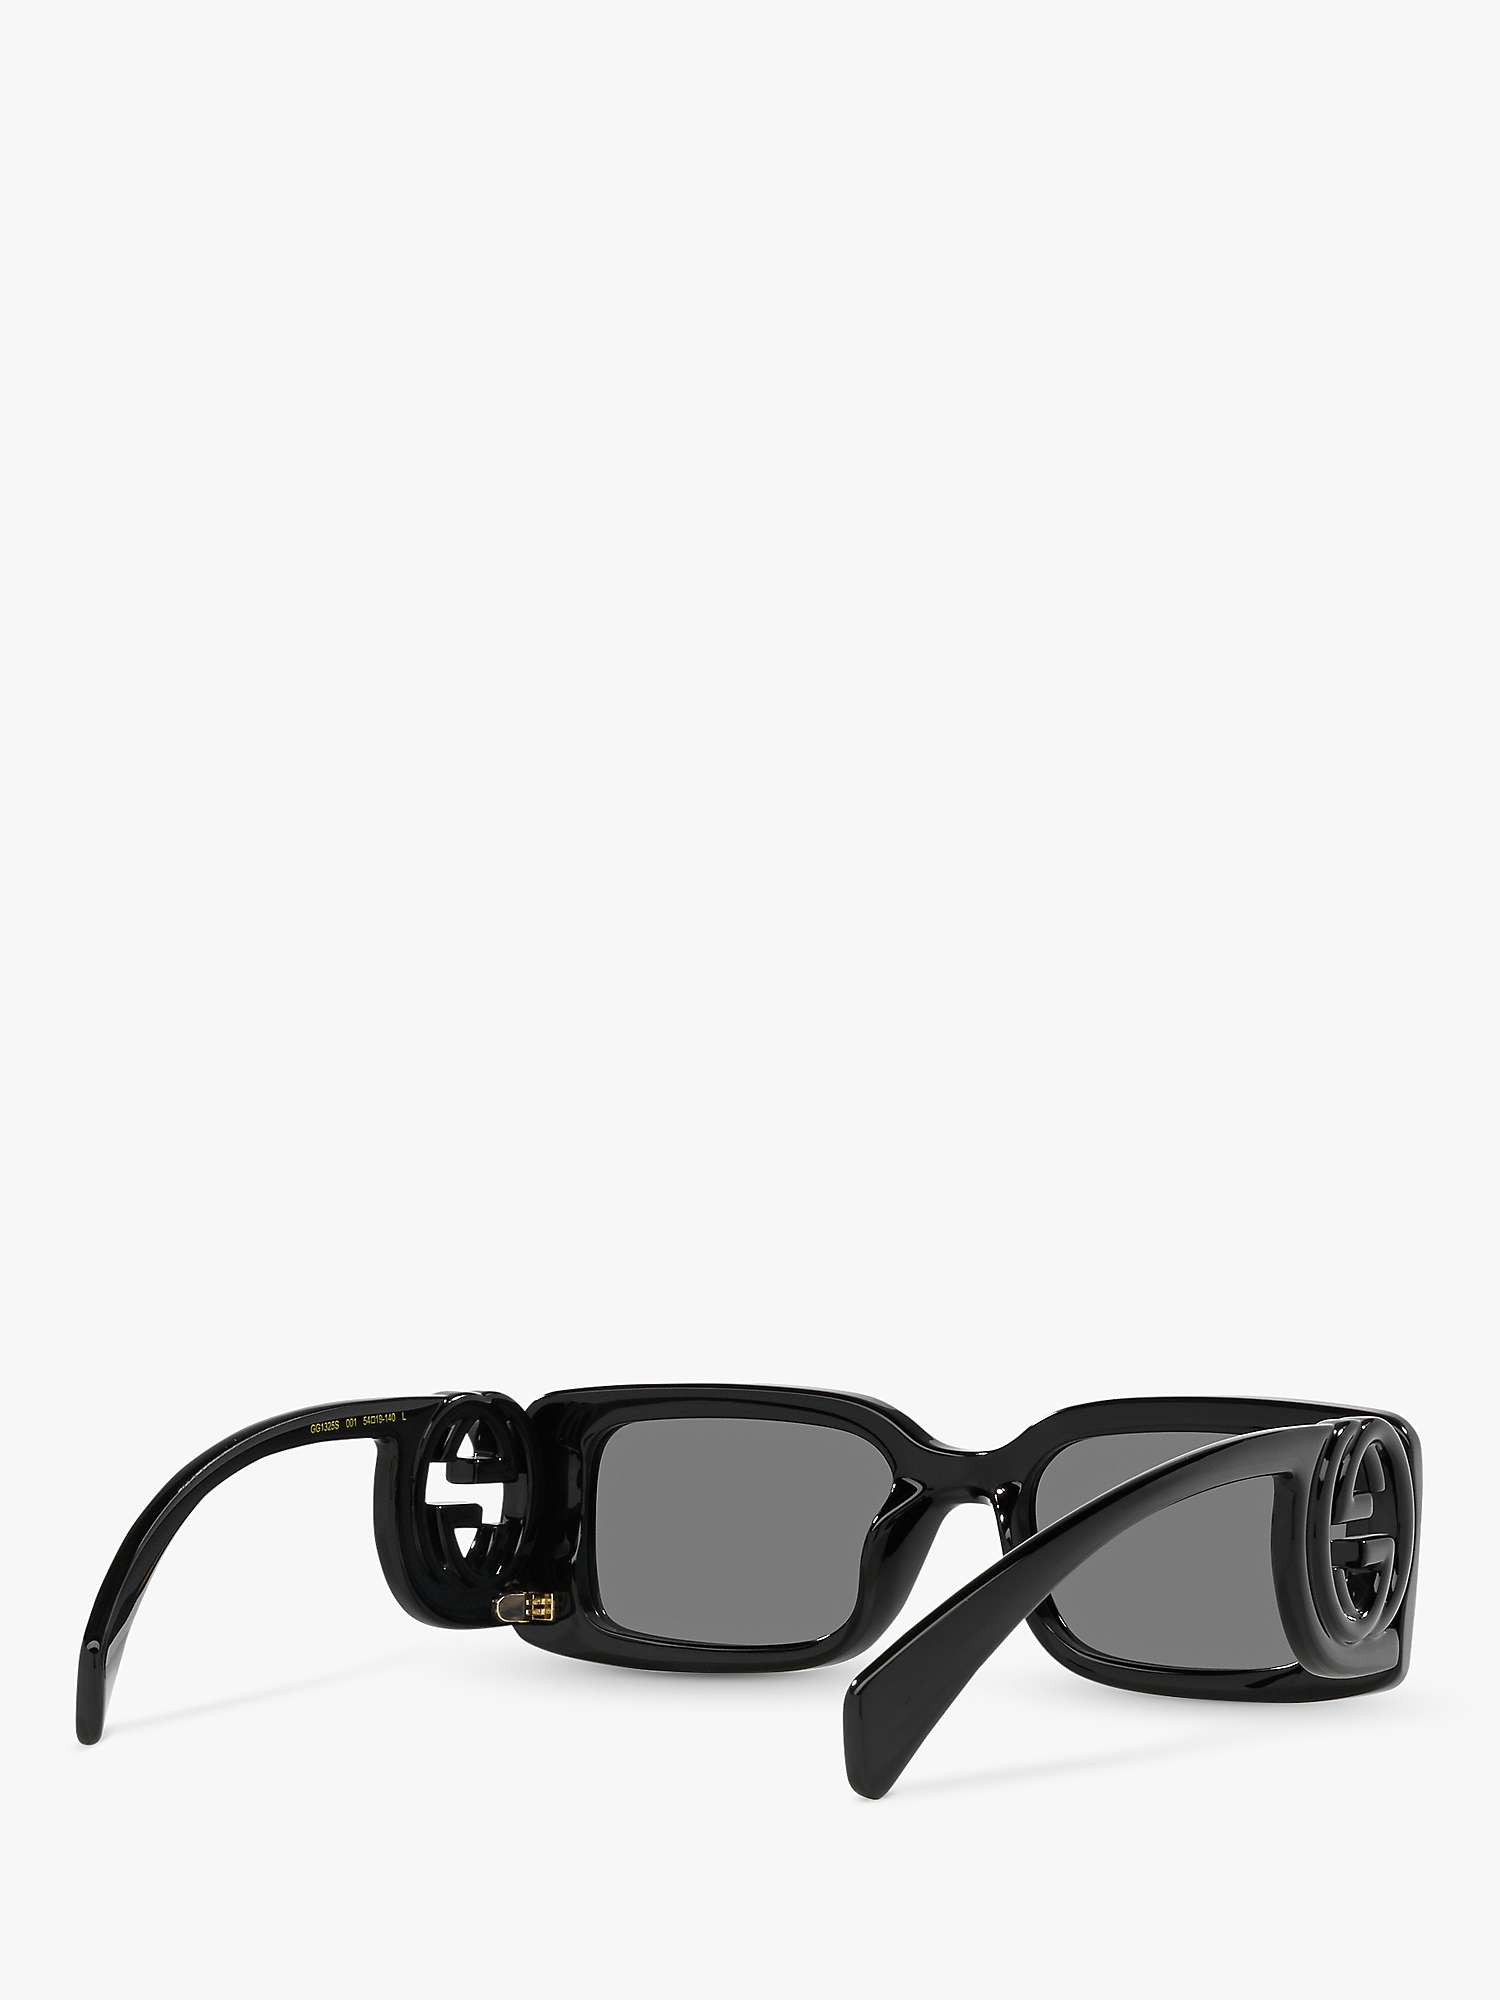 Buy Gucci GG1325S Women's Rectangular Sunglasses, Black/Grey Online at johnlewis.com